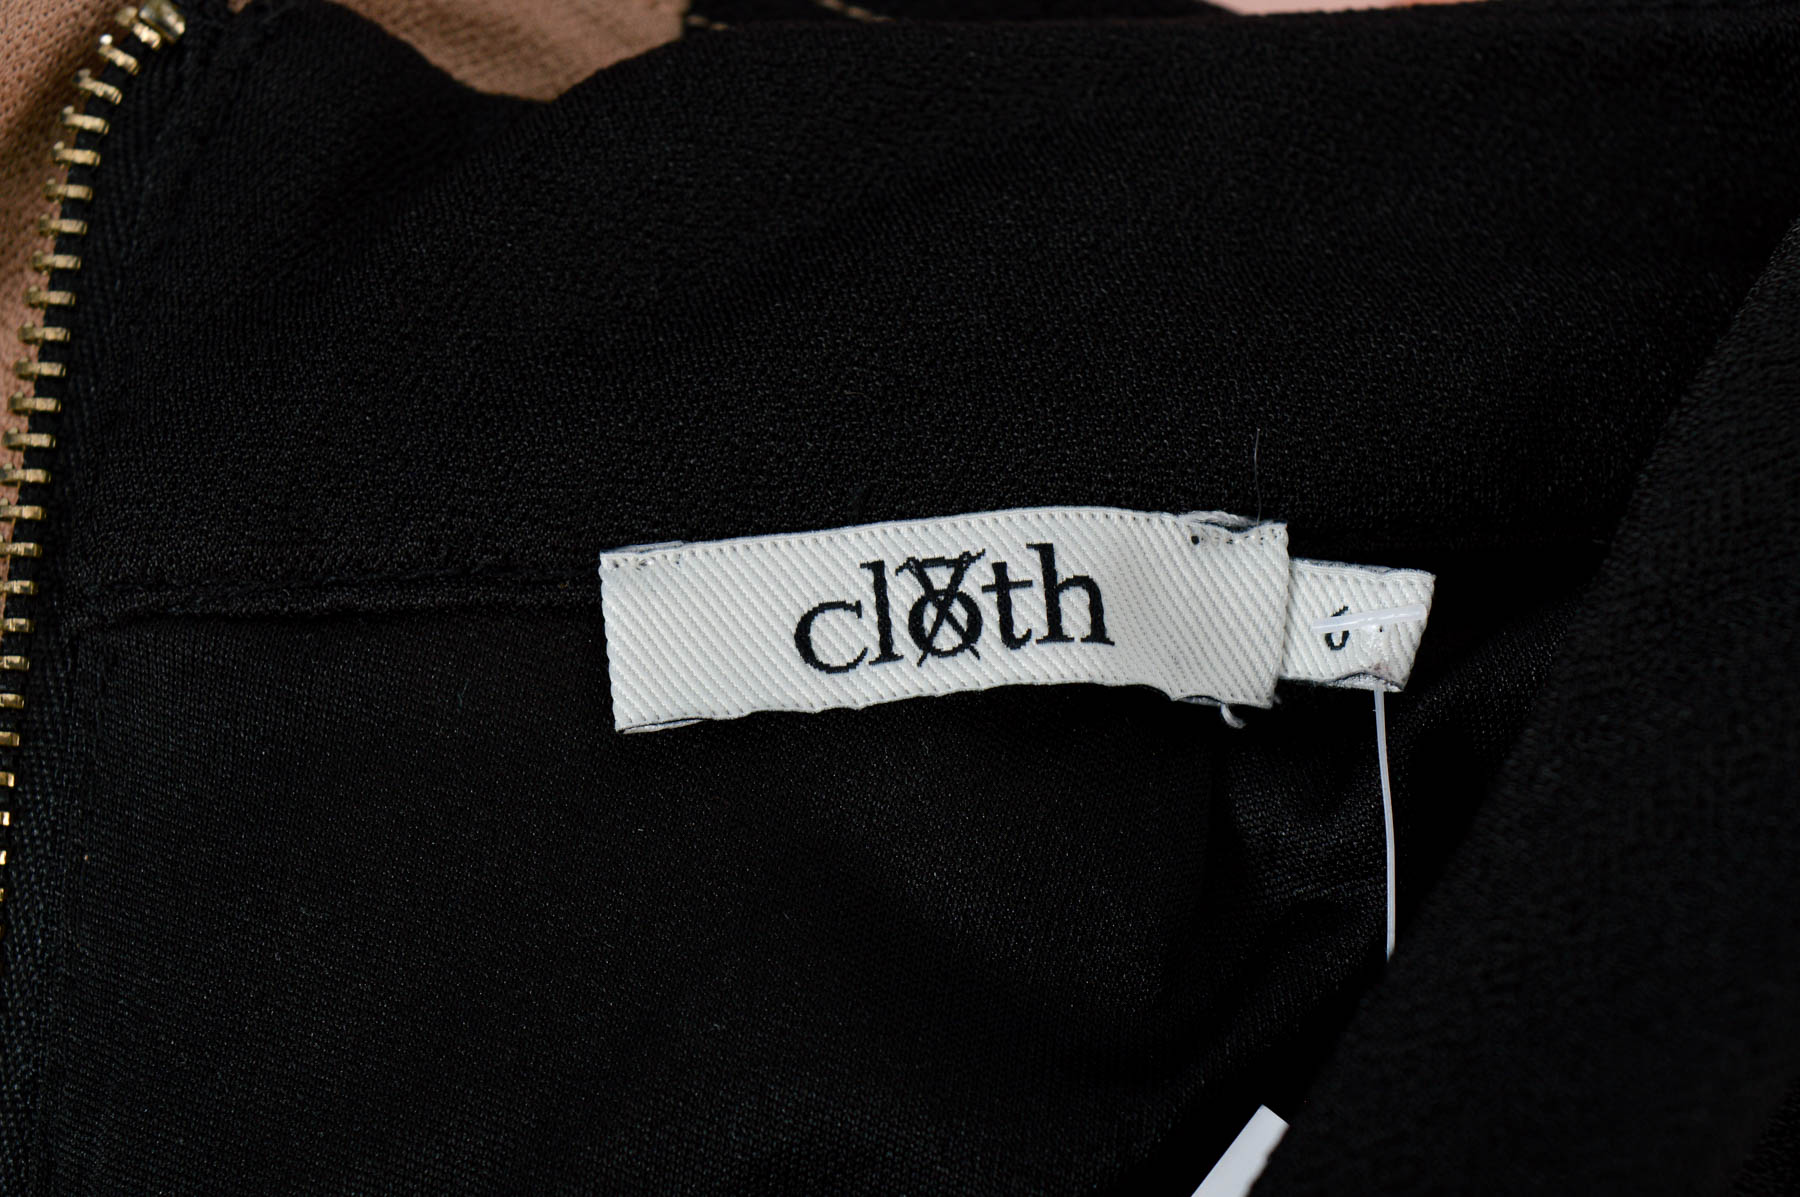 Skirt - Cloth. - 2